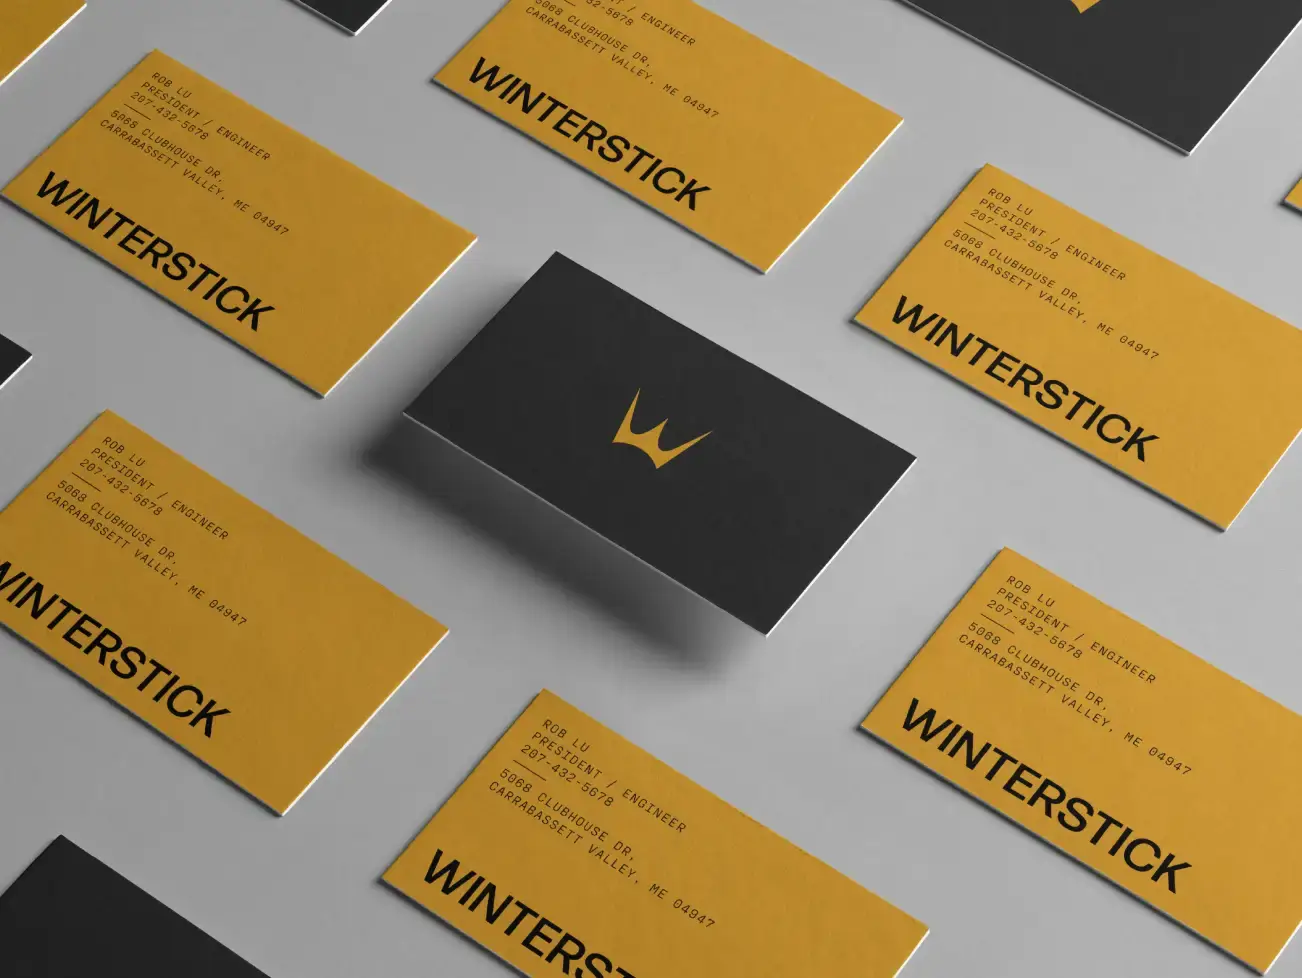 Winterstick business cards